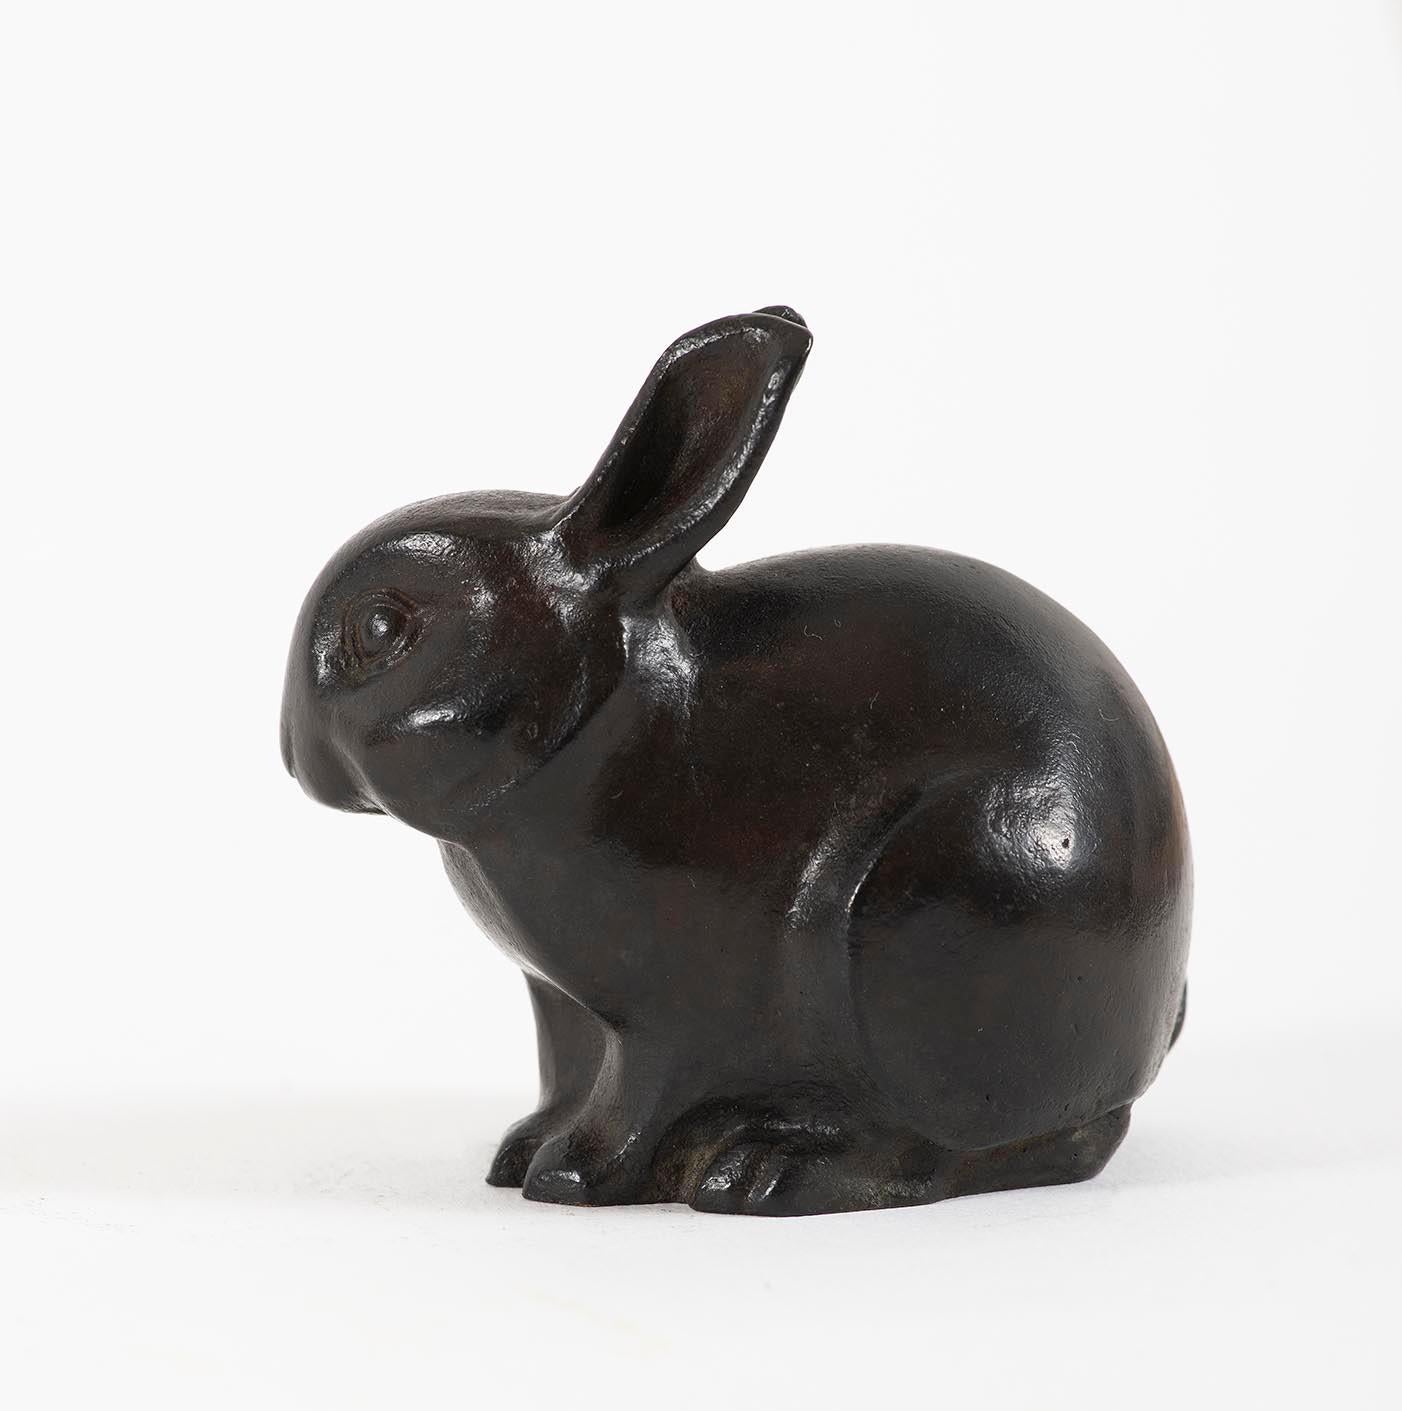 Lapin, by Sandoz, rabbit, animal, sculpture, bronze, 1910's, swiss artist, cast - Modern Art by Edouard-Marcel Sandoz